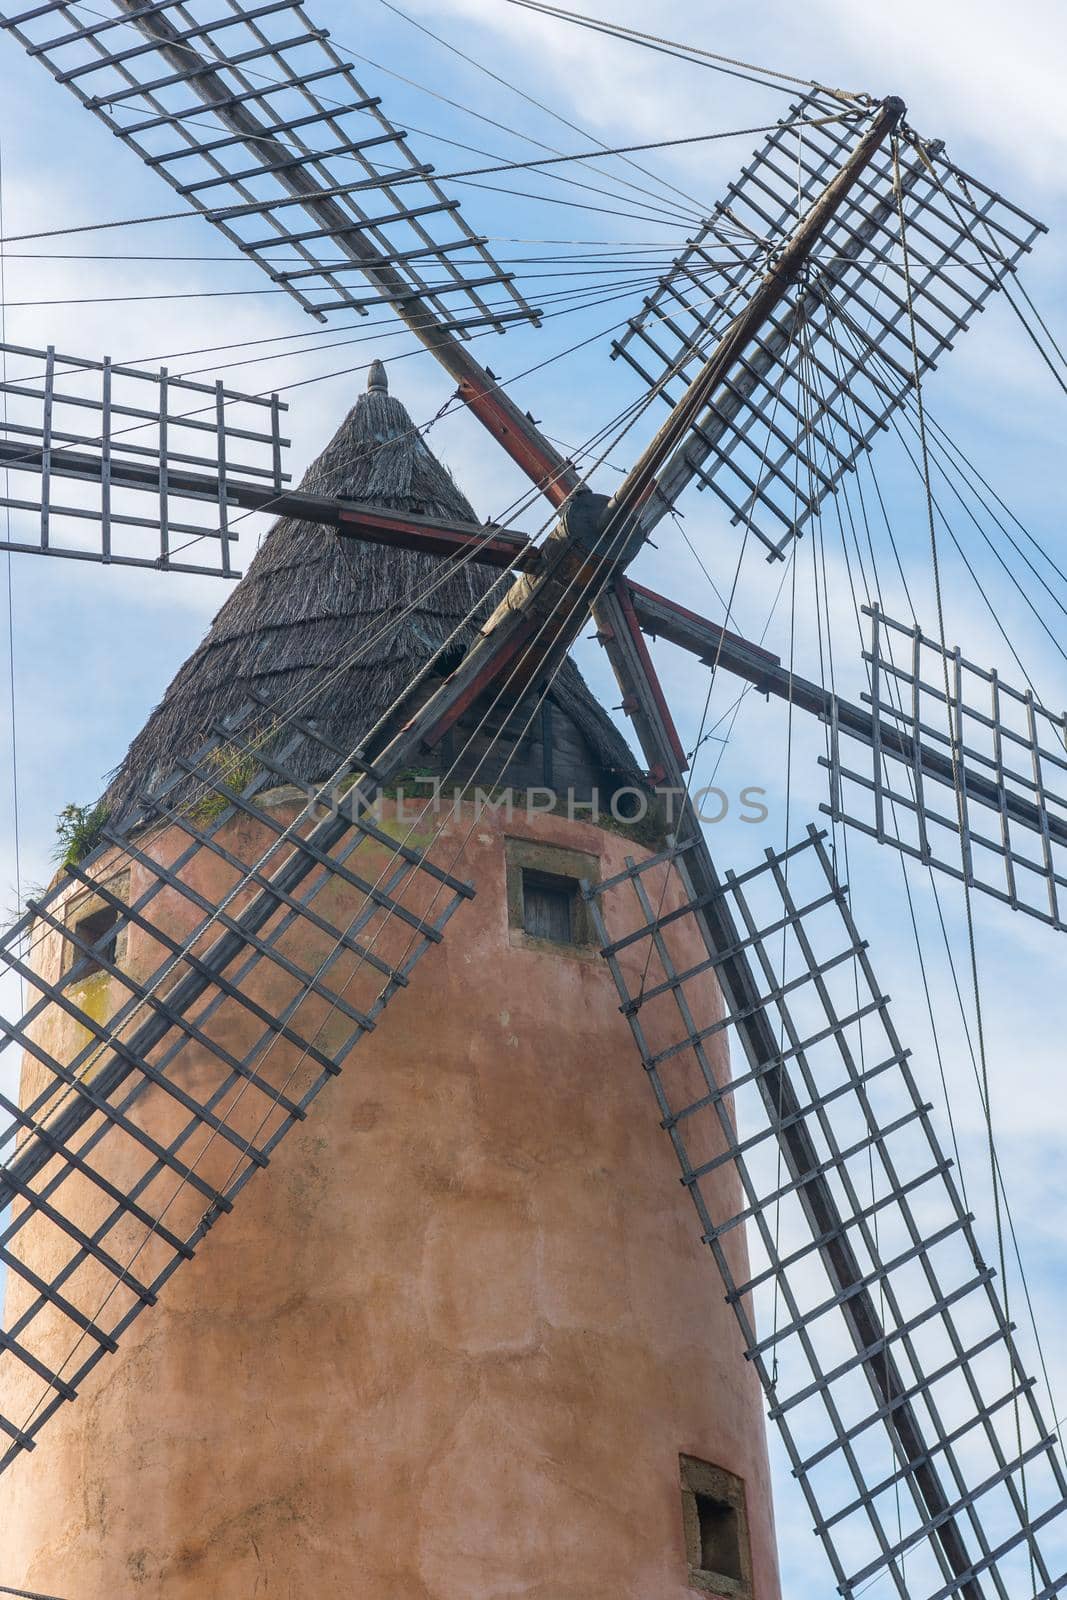 Typical wind mill, Majorca by bildgigant